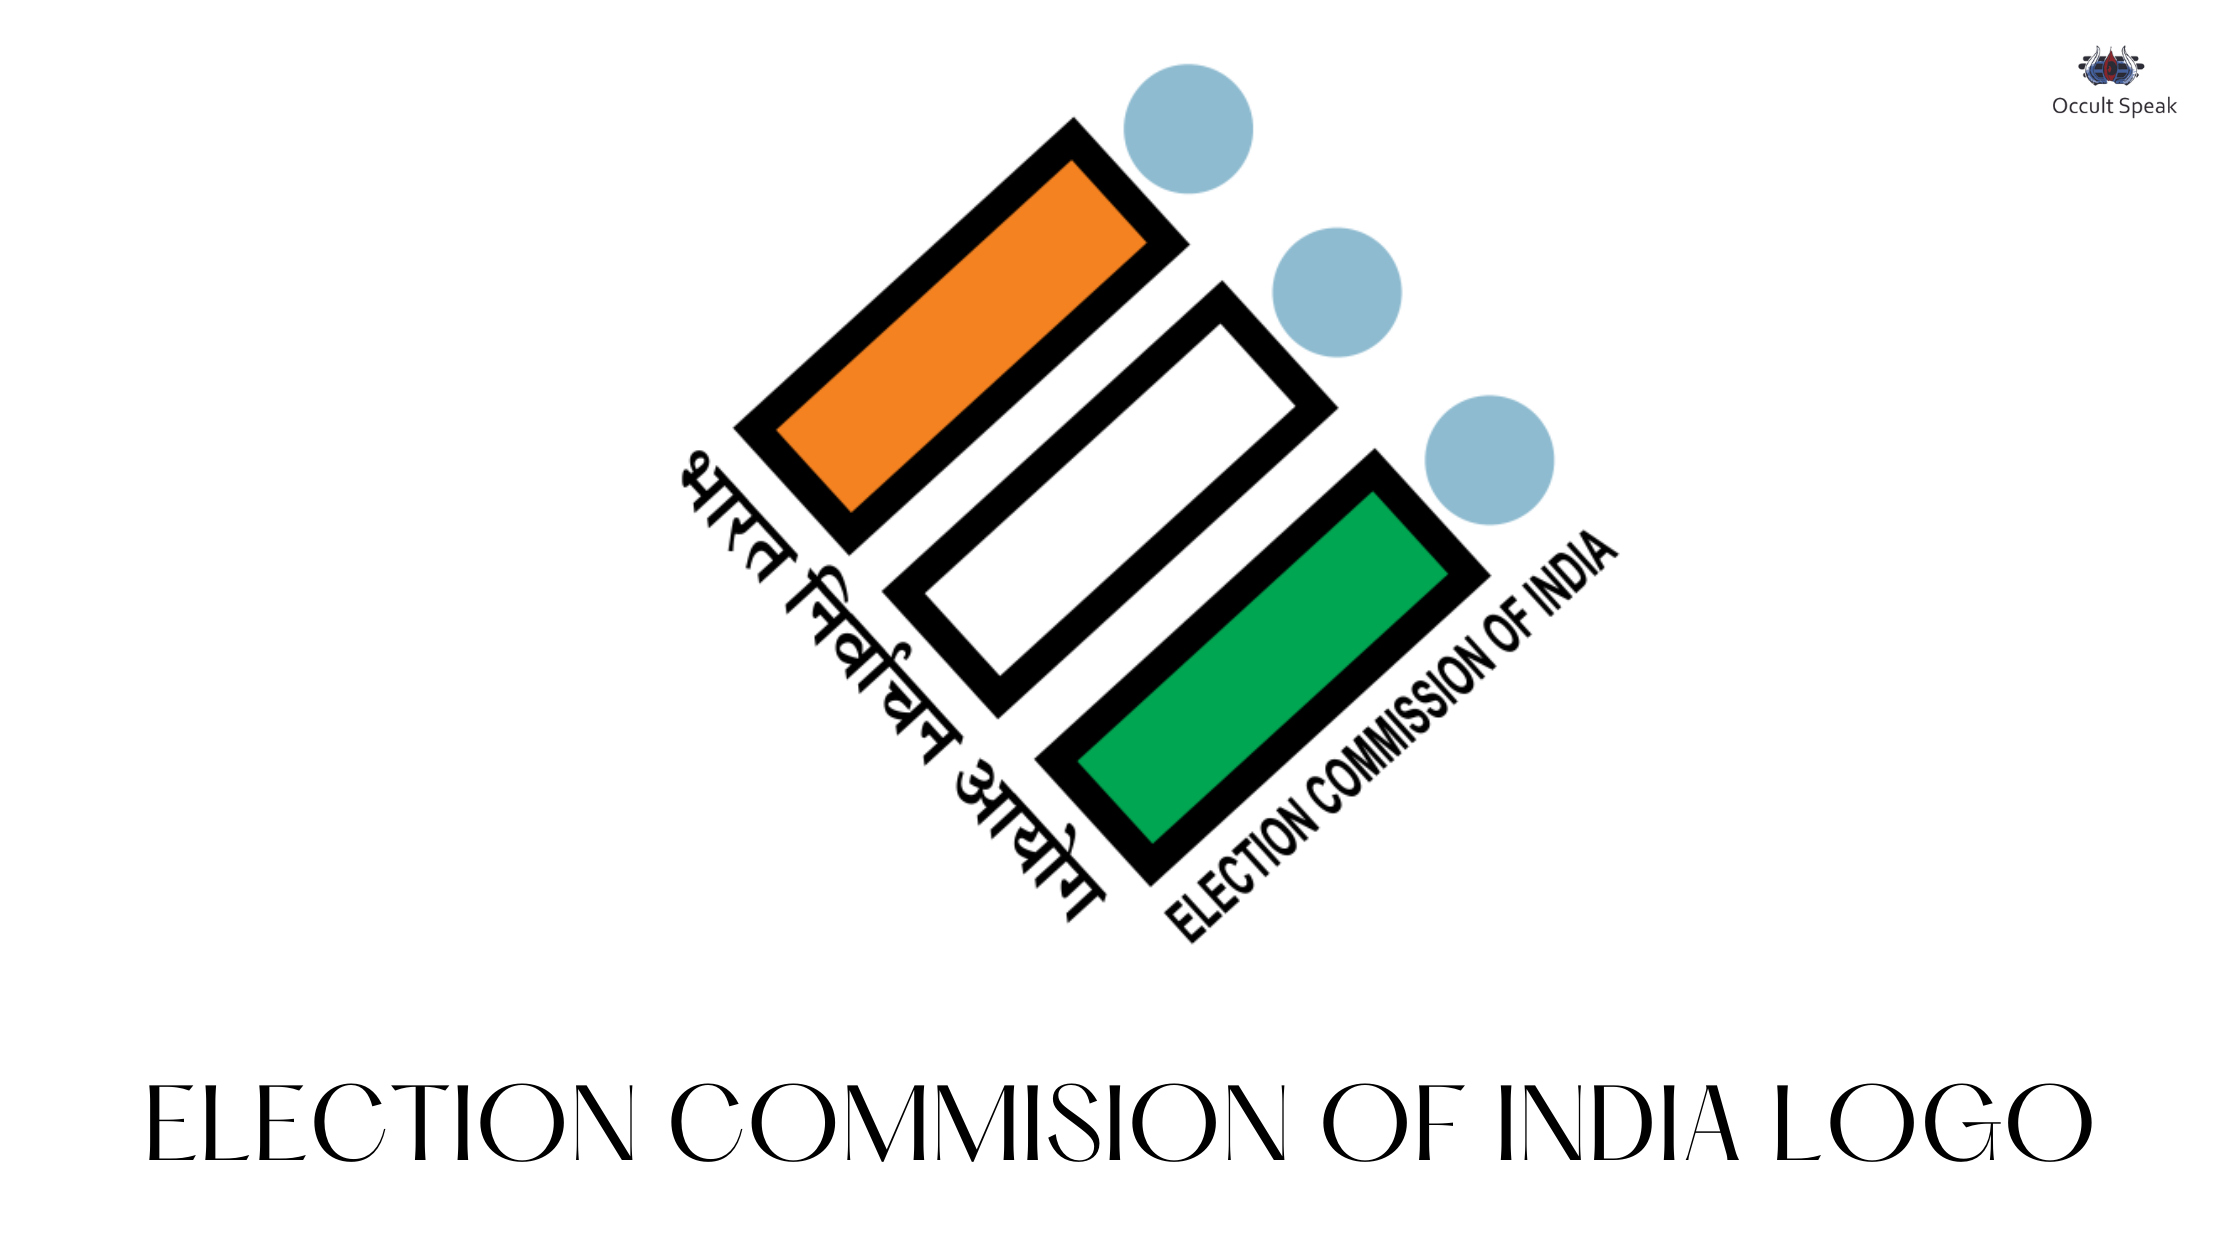 Election Commission of India Logo Design